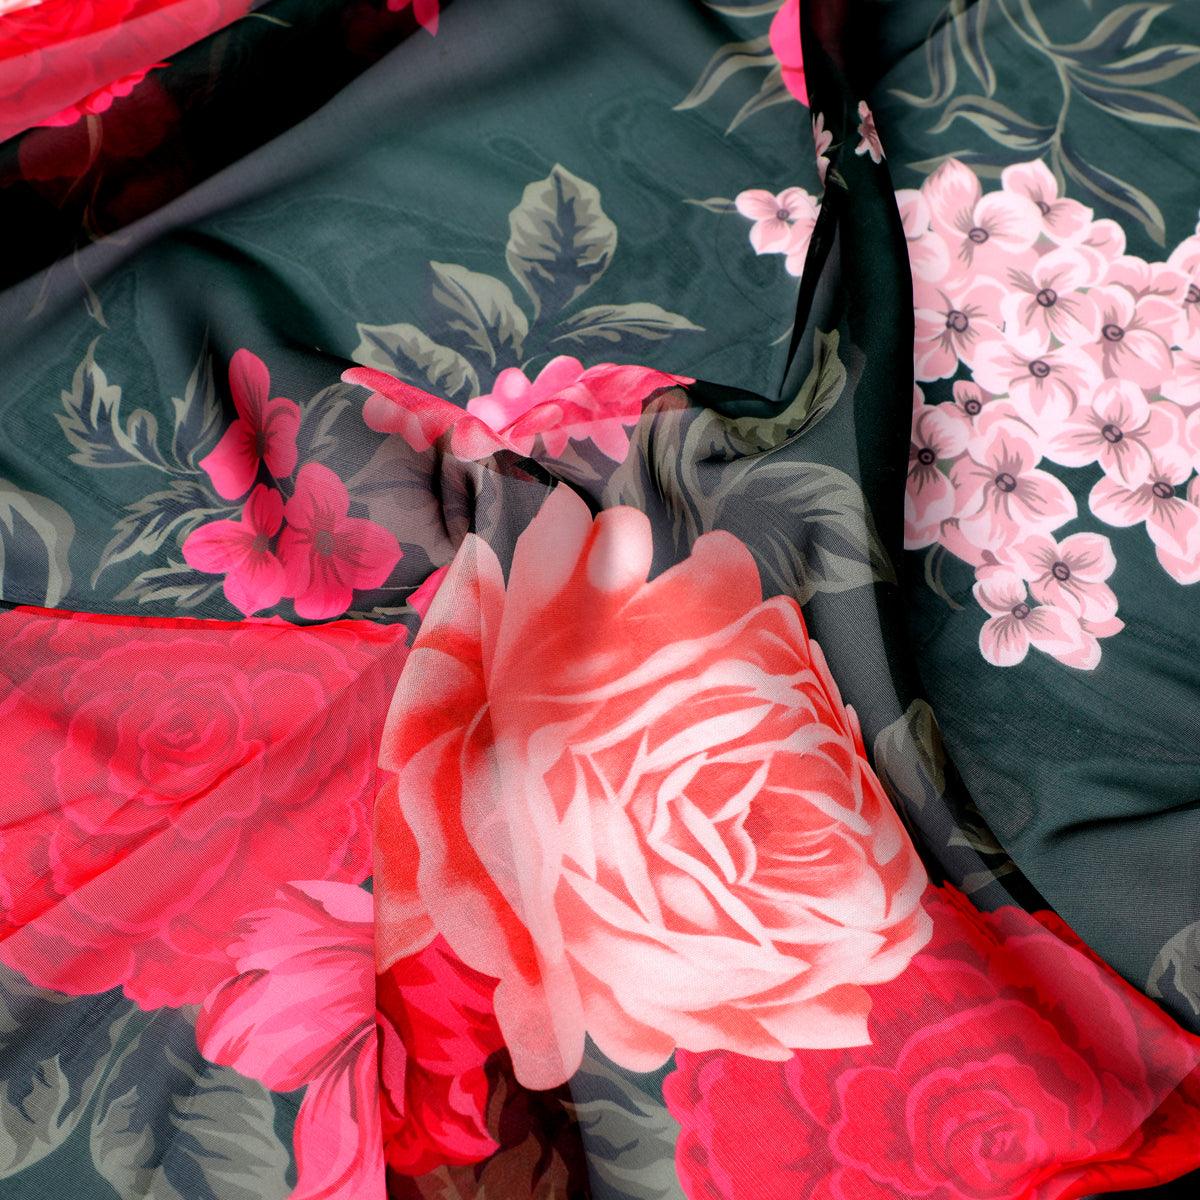 Beautiful Flower Pattern With Buds Digital Printed Fabric - Organza - FAB VOGUE Studio®